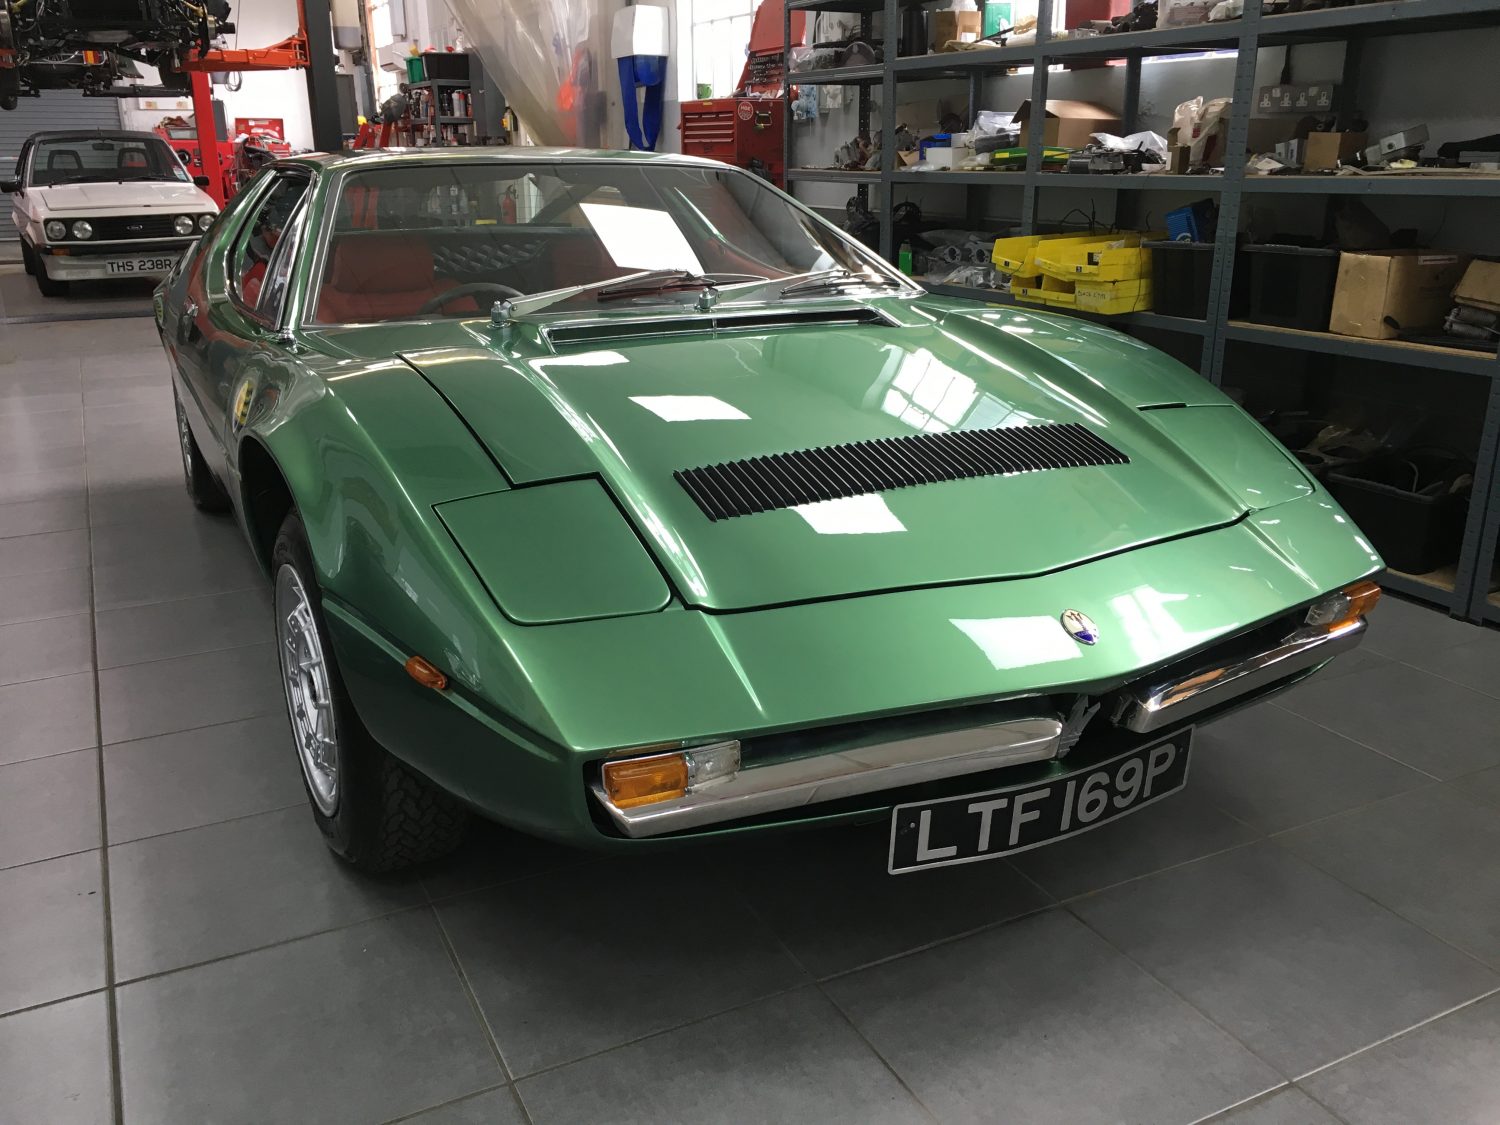 1975 Maserati Merak (Project Dexy) - Bridge Classic Cars